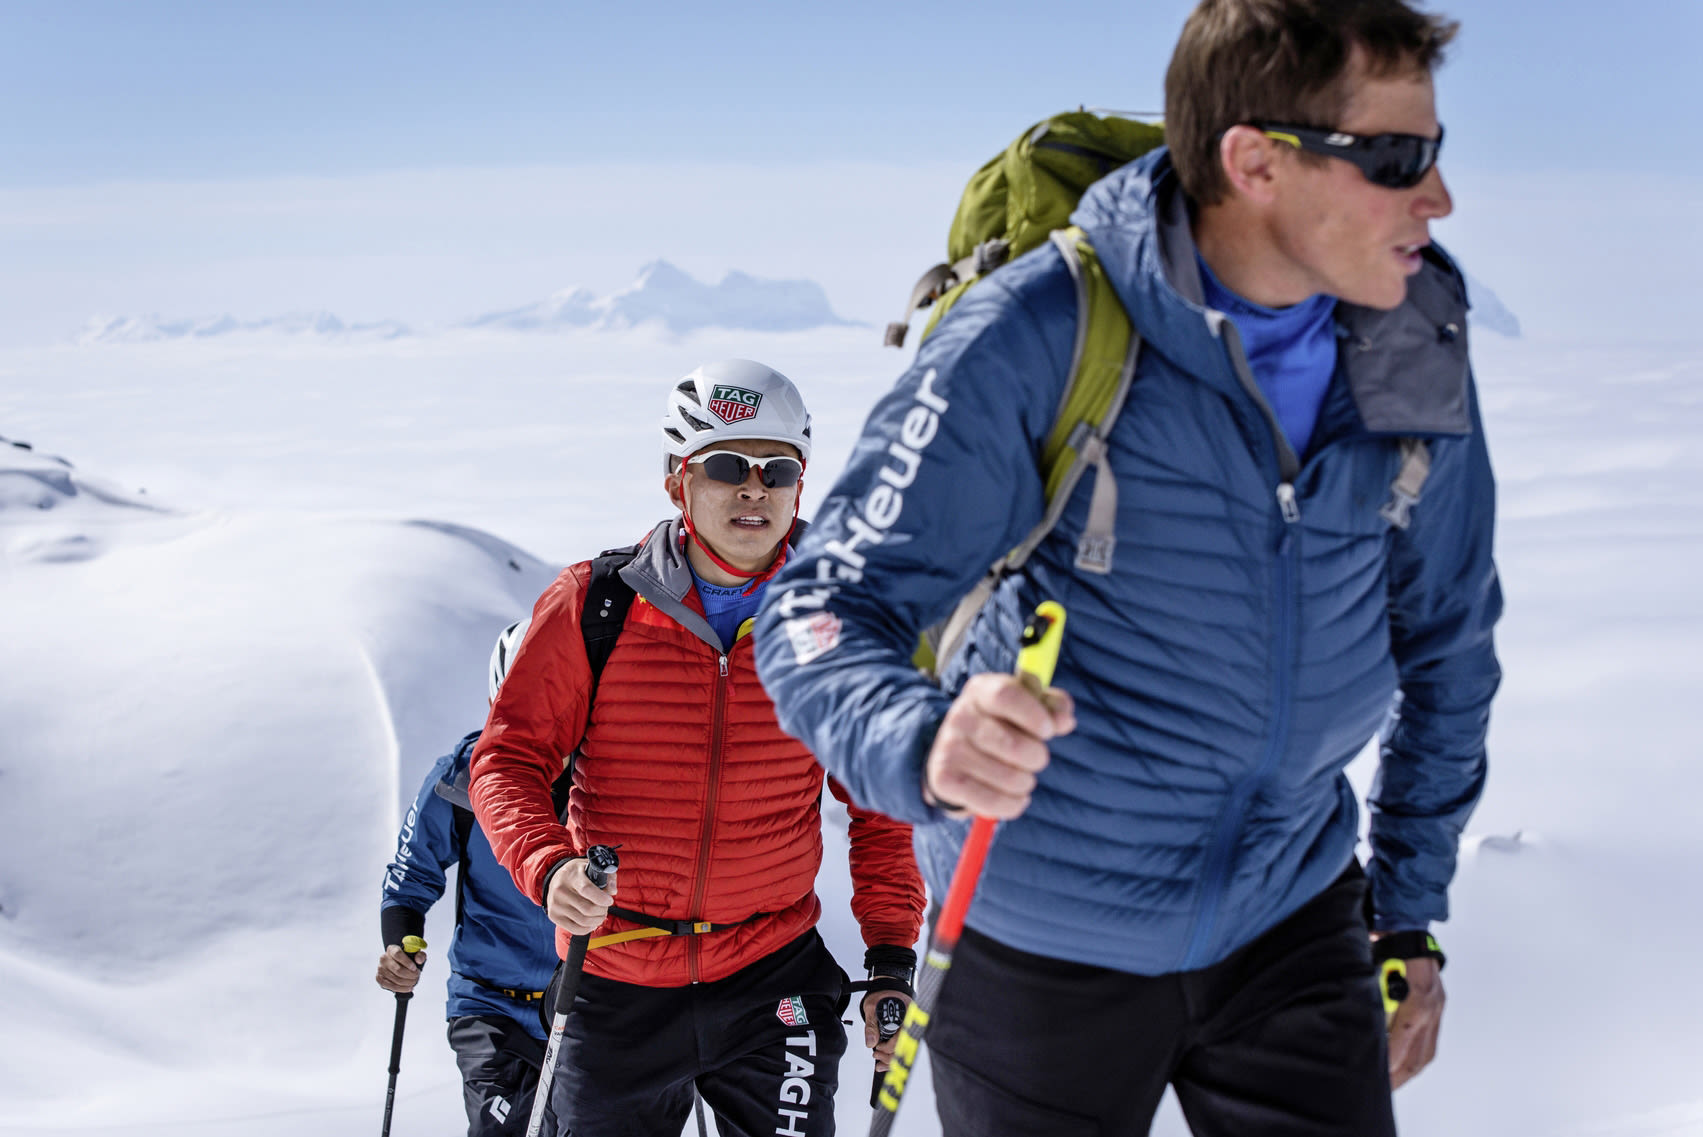 PDG, Zermatt, Verbier, Ski touring, Race